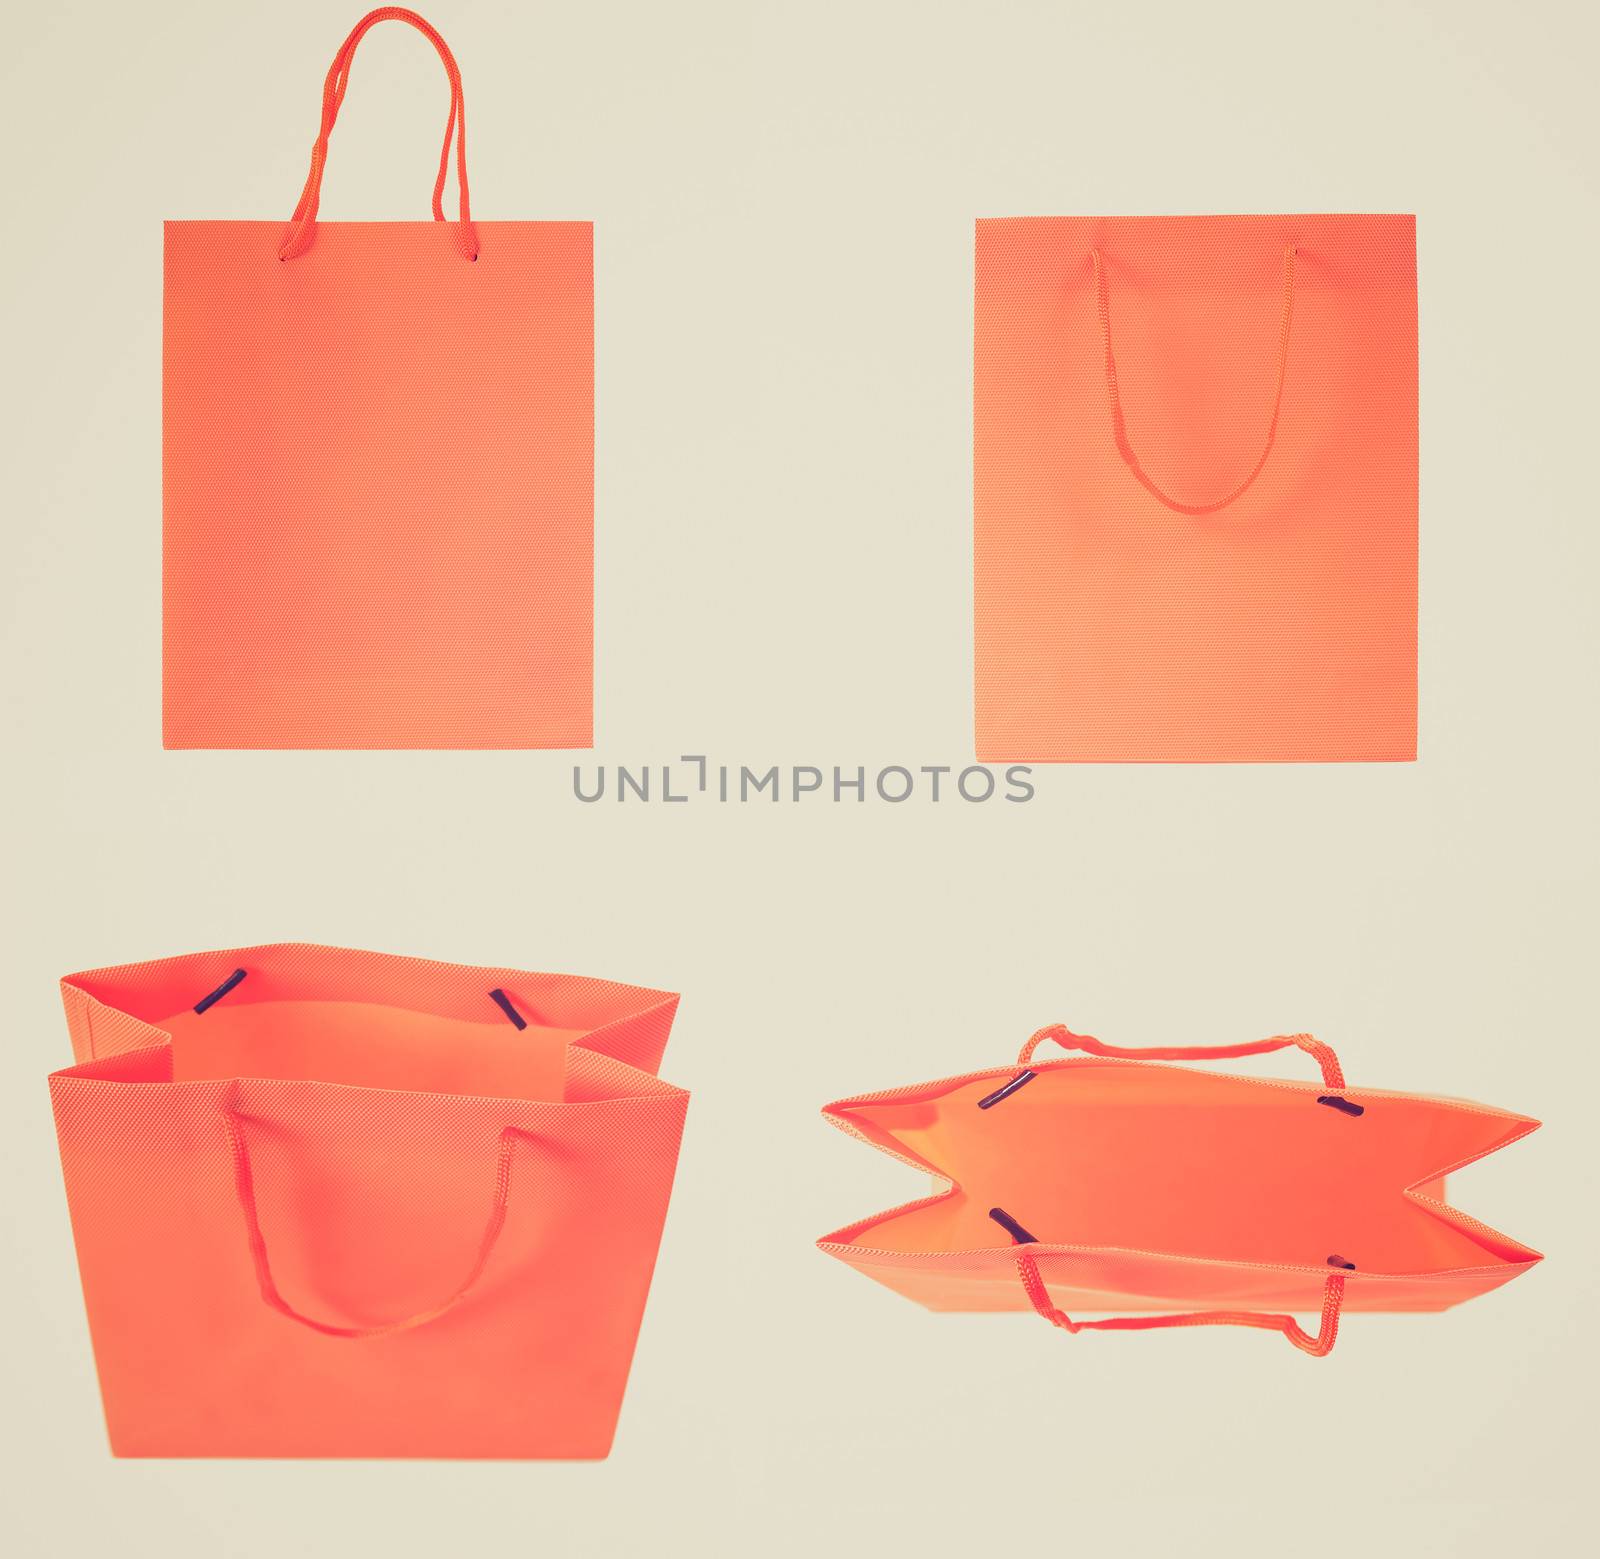 Vintage retro looking Set of orange shopping bags isolated over white background